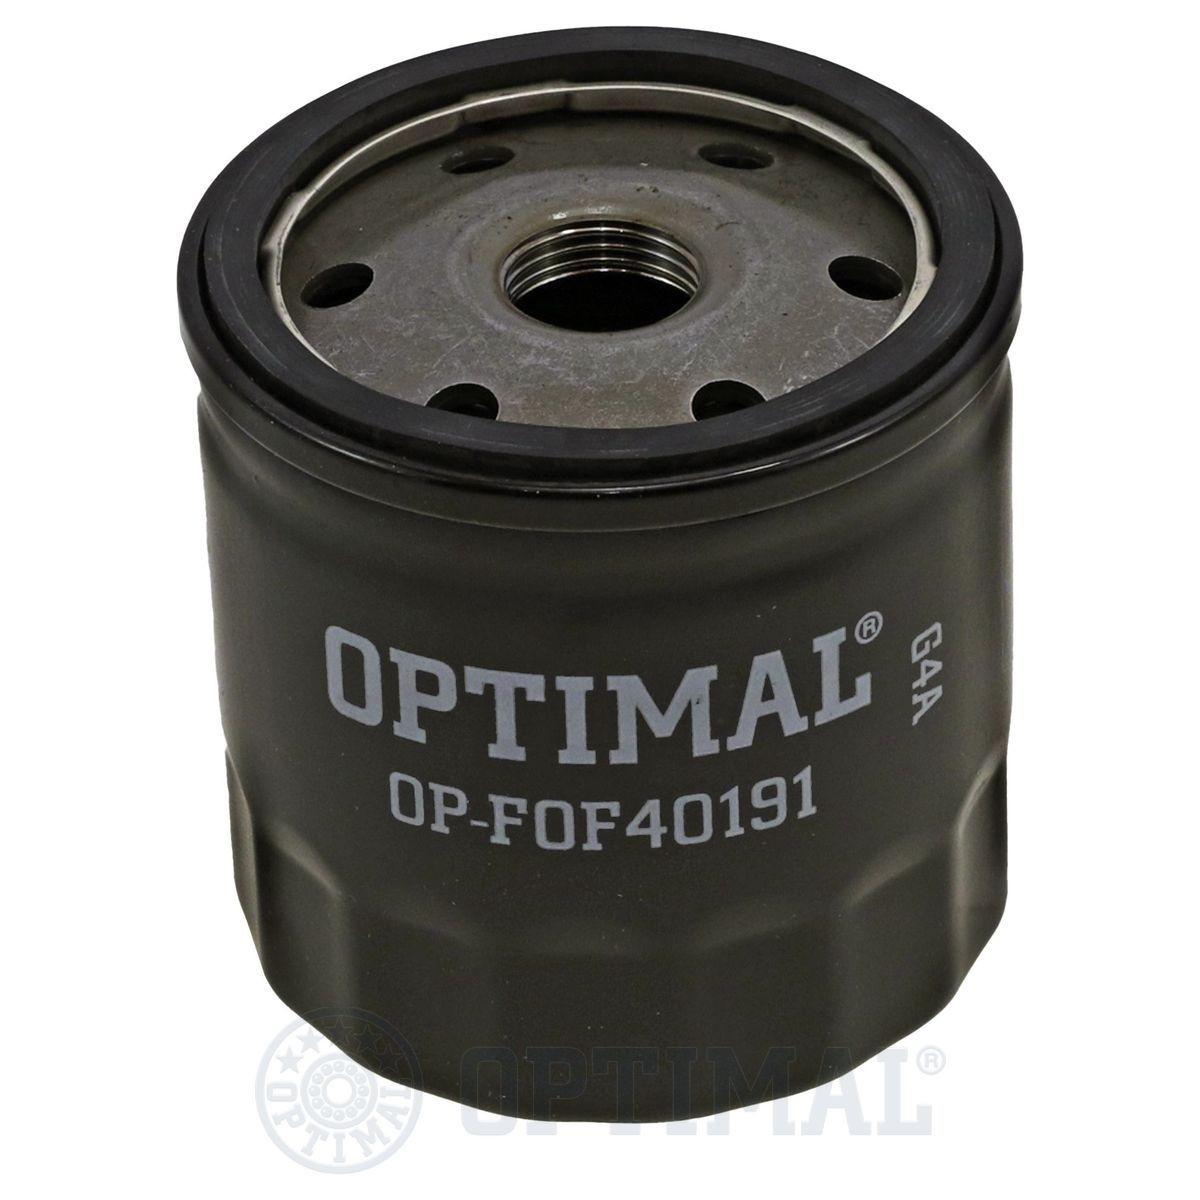 OPTIMAL OP-FOF40191 Oil filter AS15000-2300L